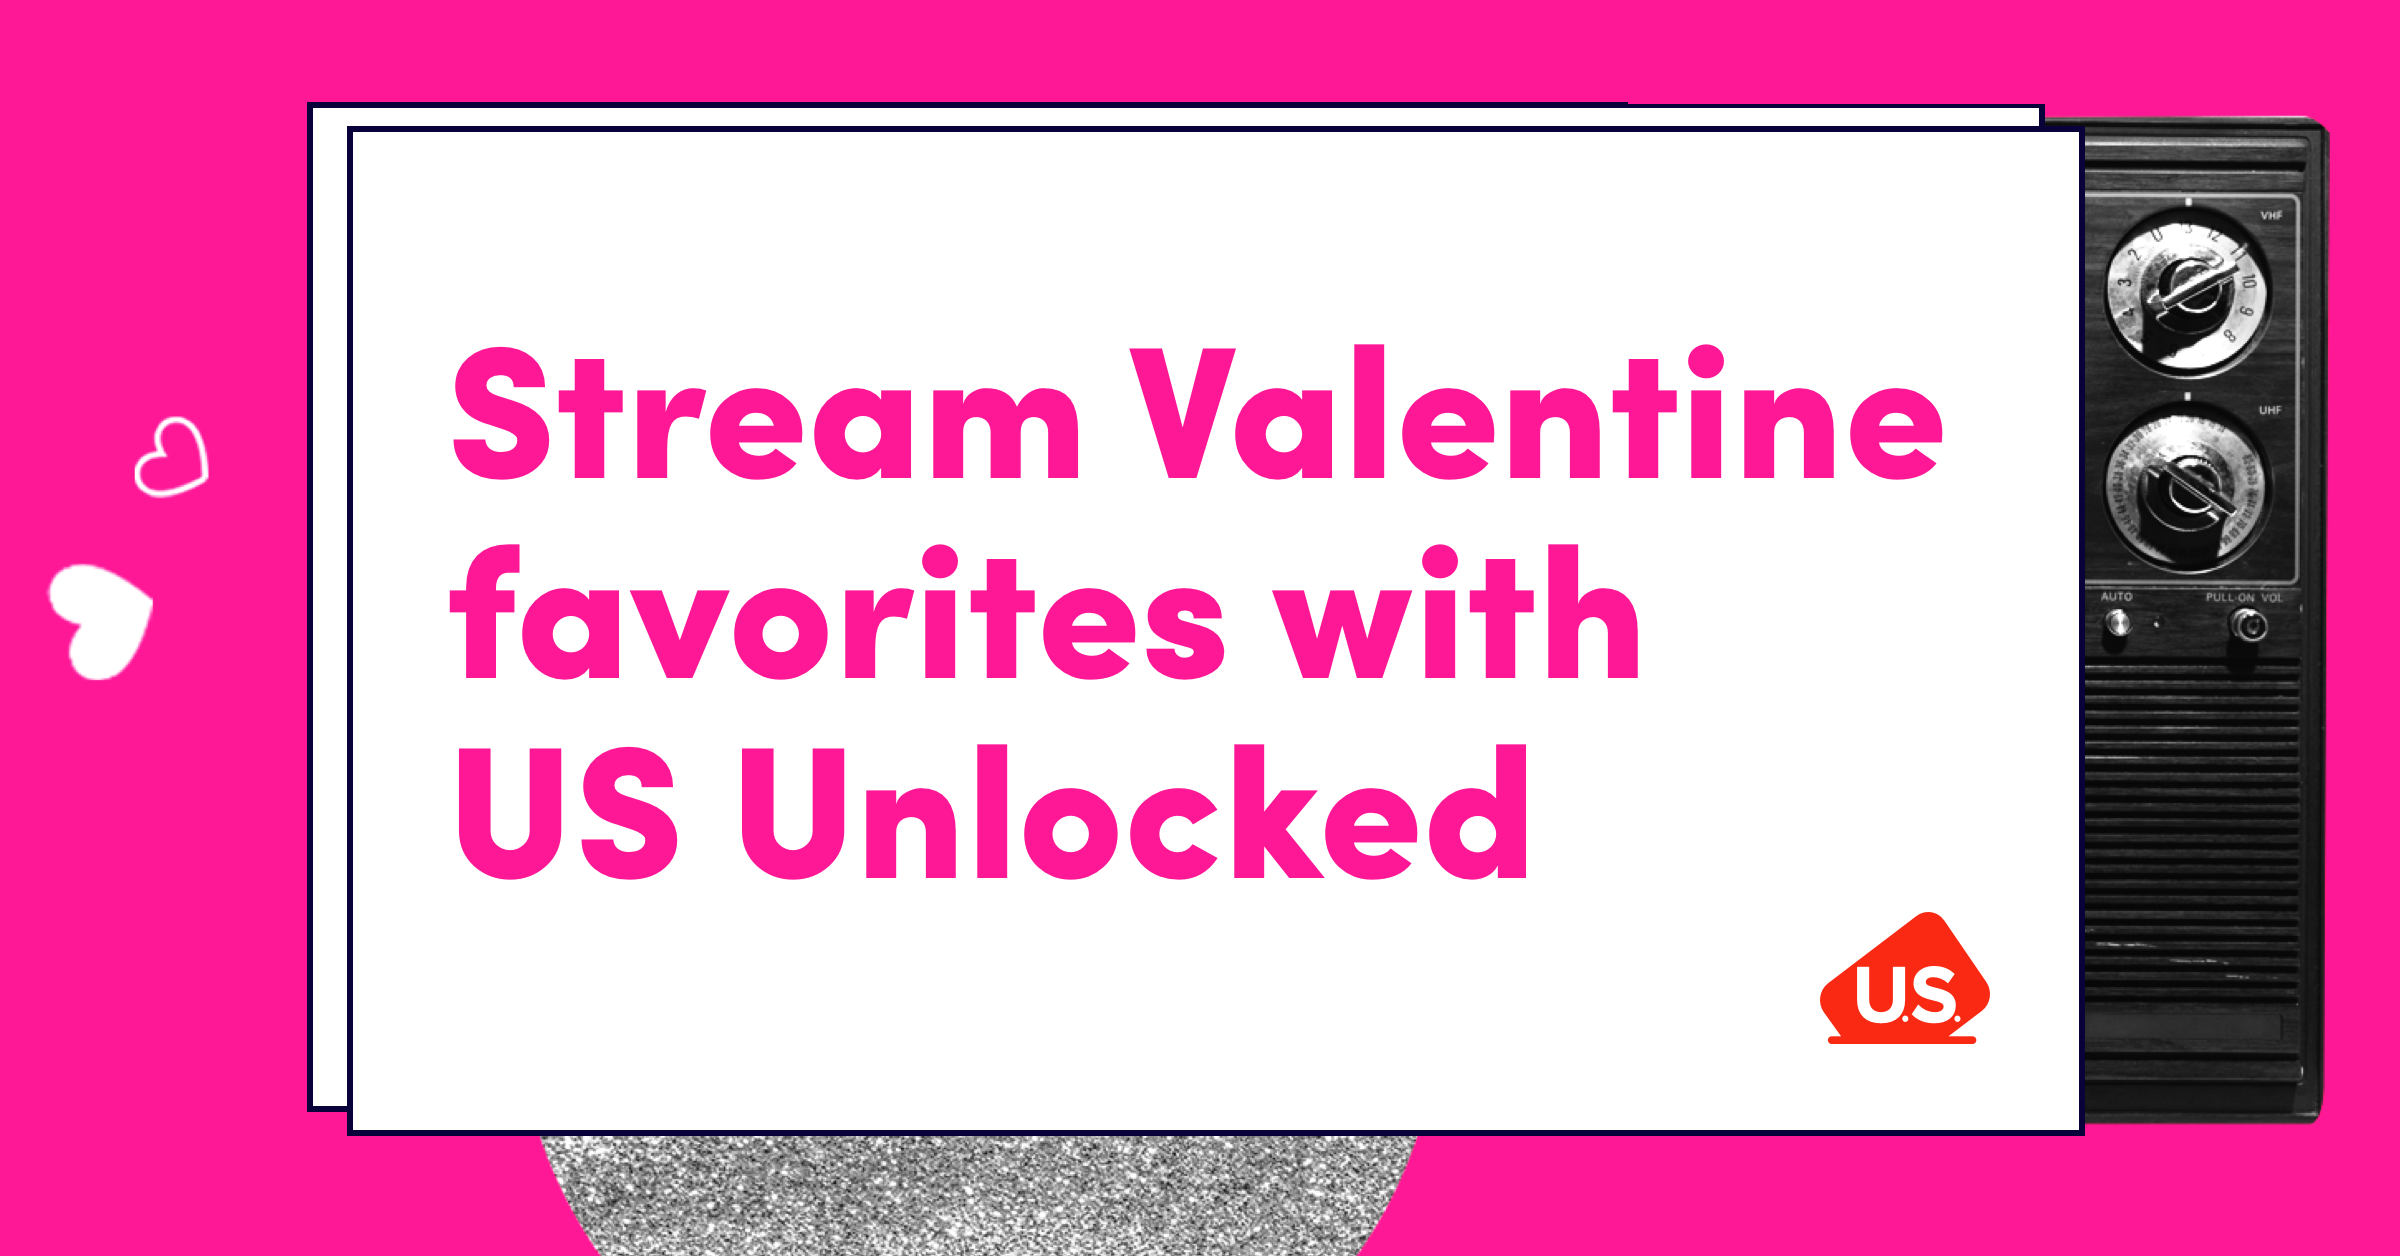 Stream Valentine Favorites with US Unlocked